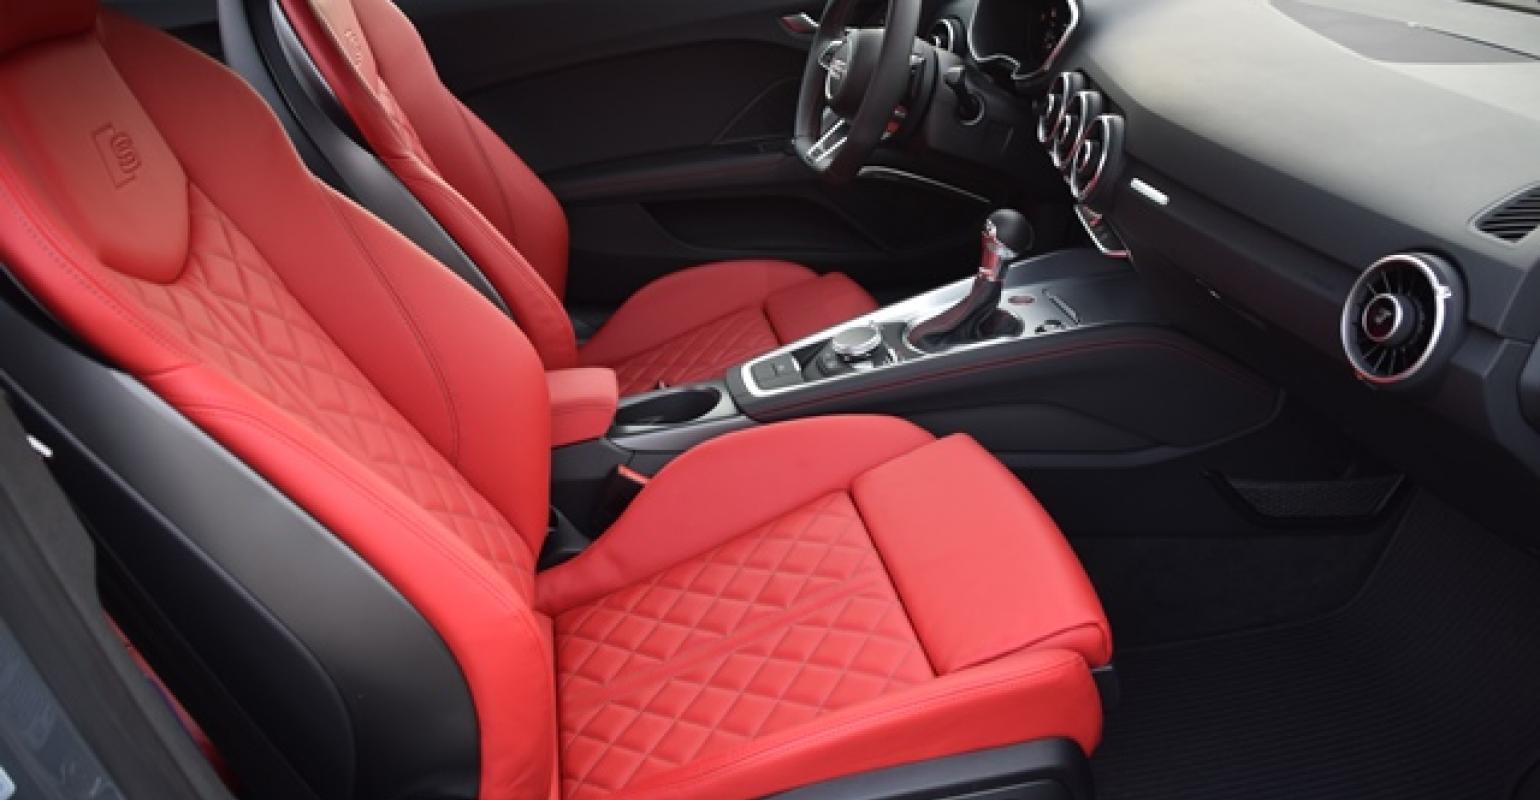 Gallery: 2013 Ibis White TT RS With Audi Exclusive Interior - QuattroWorld